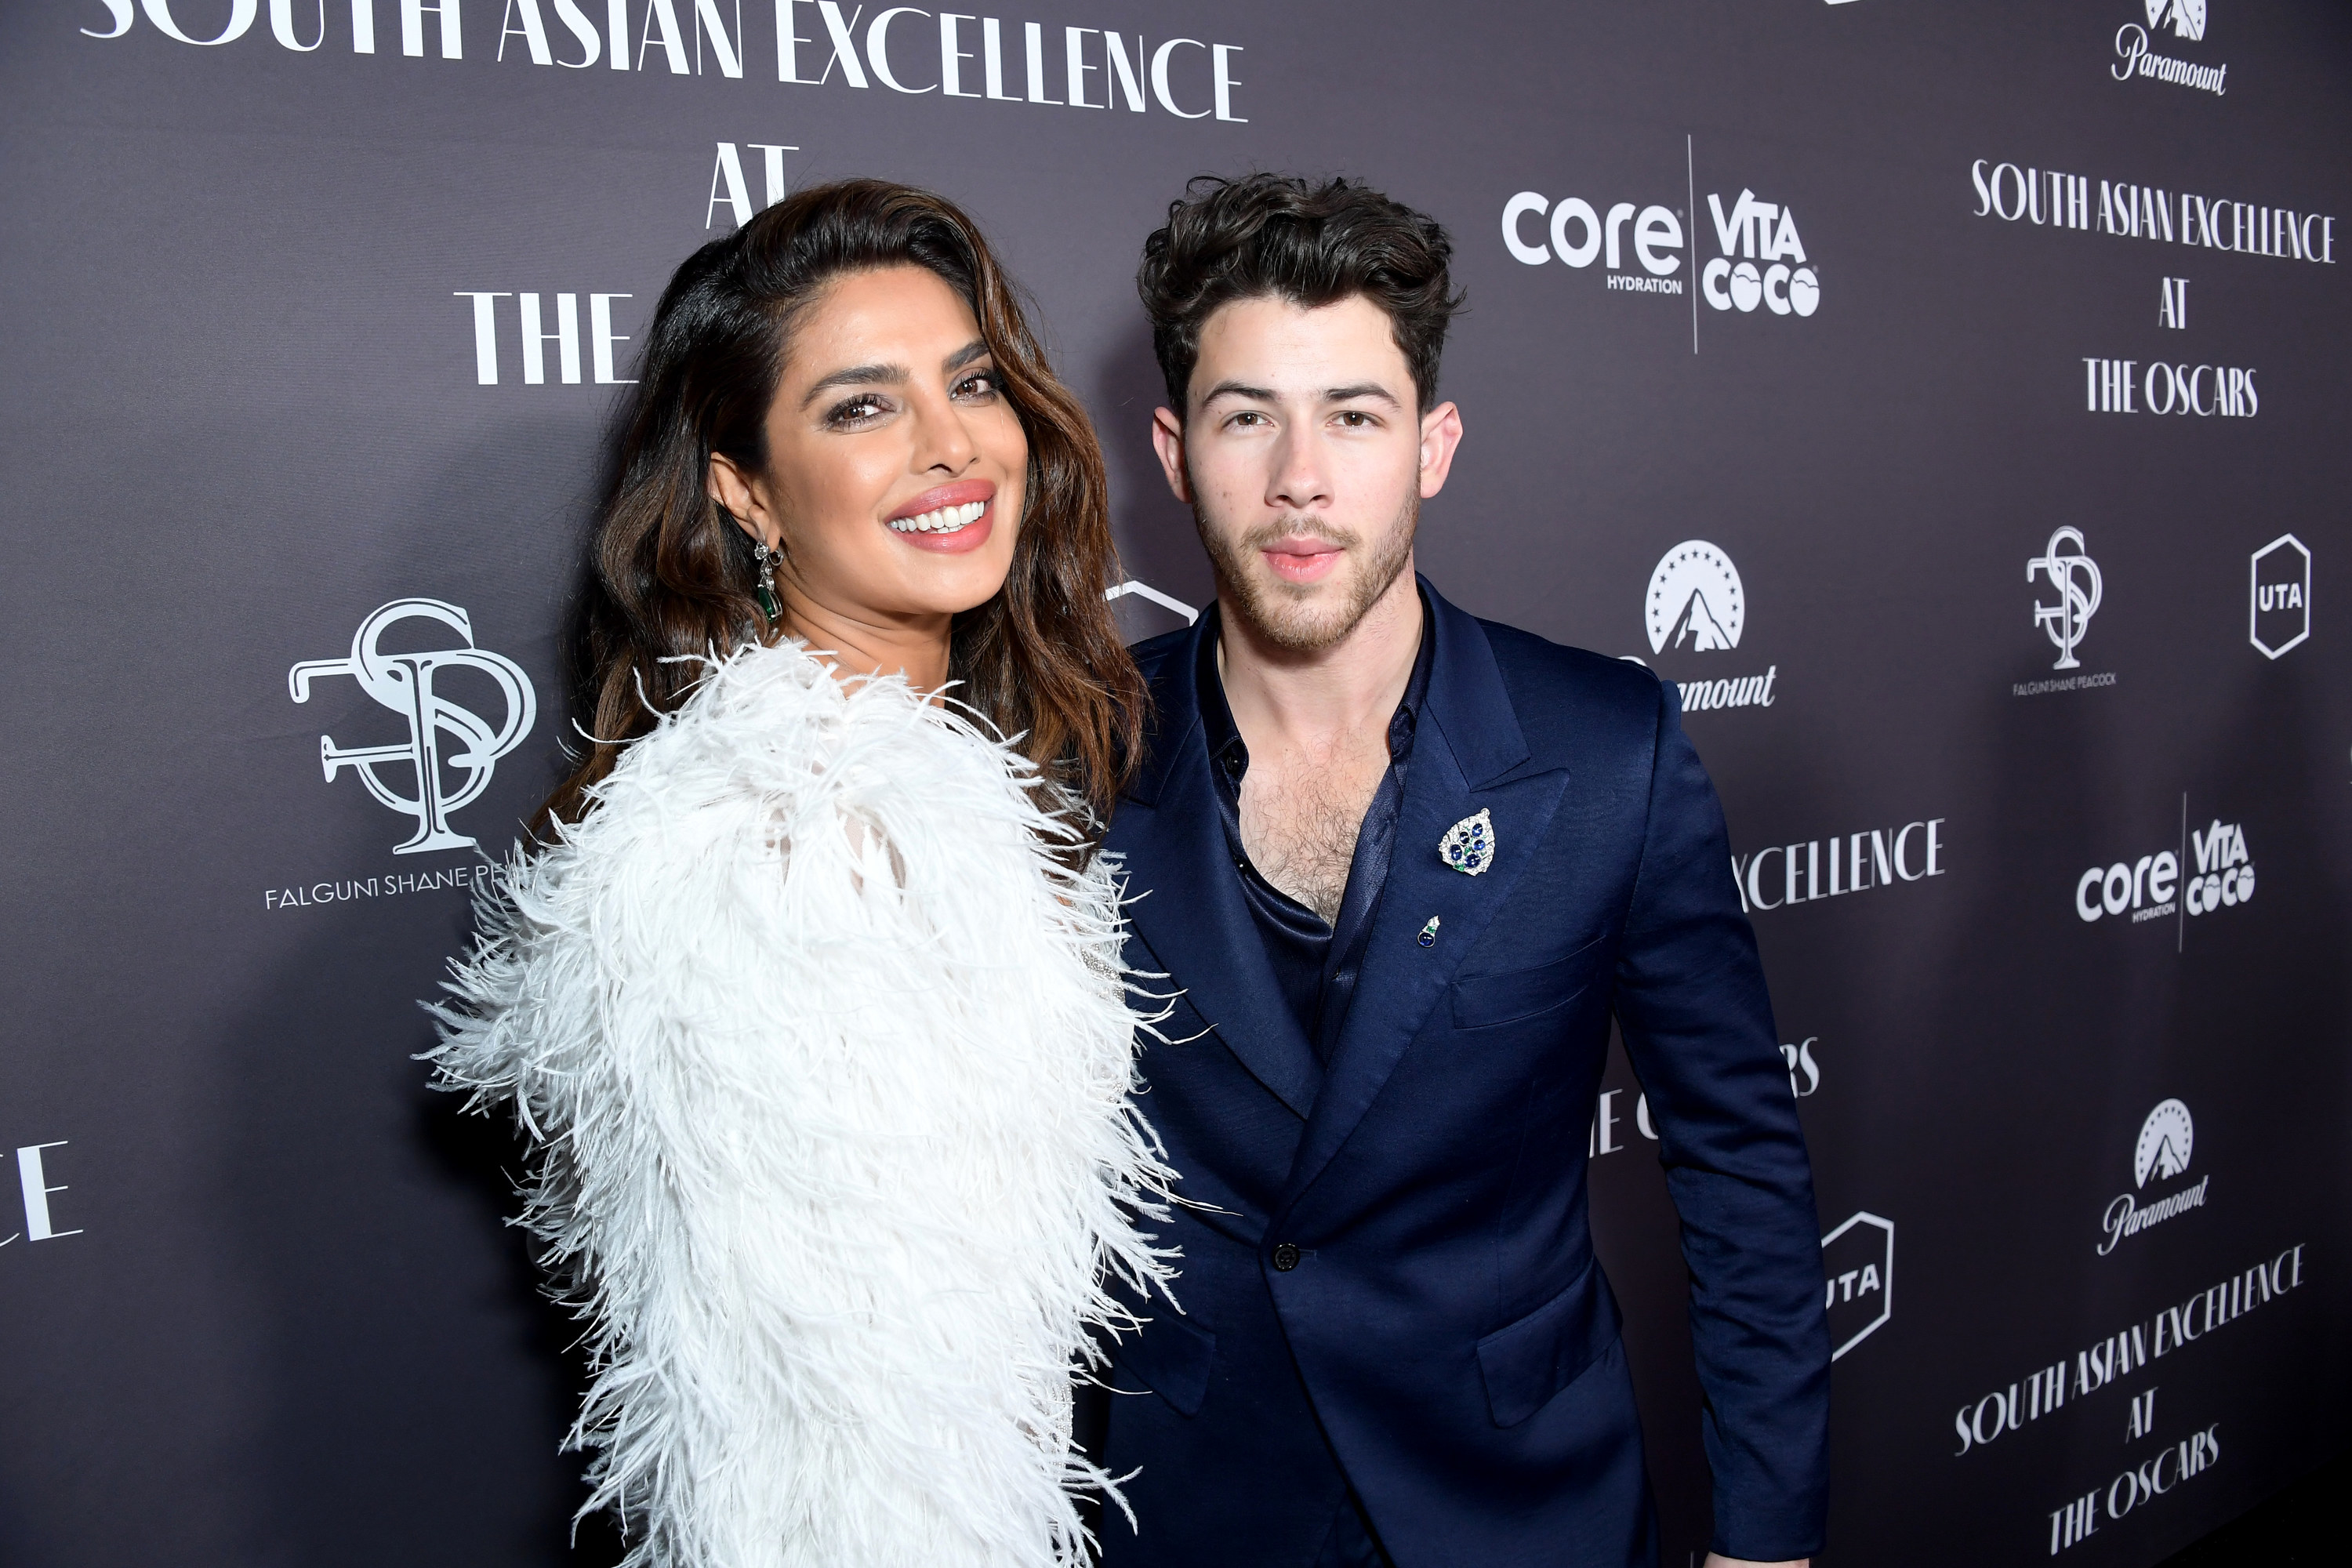 Priyanka Chopra and Joe Jonas pose together at a red carpet event